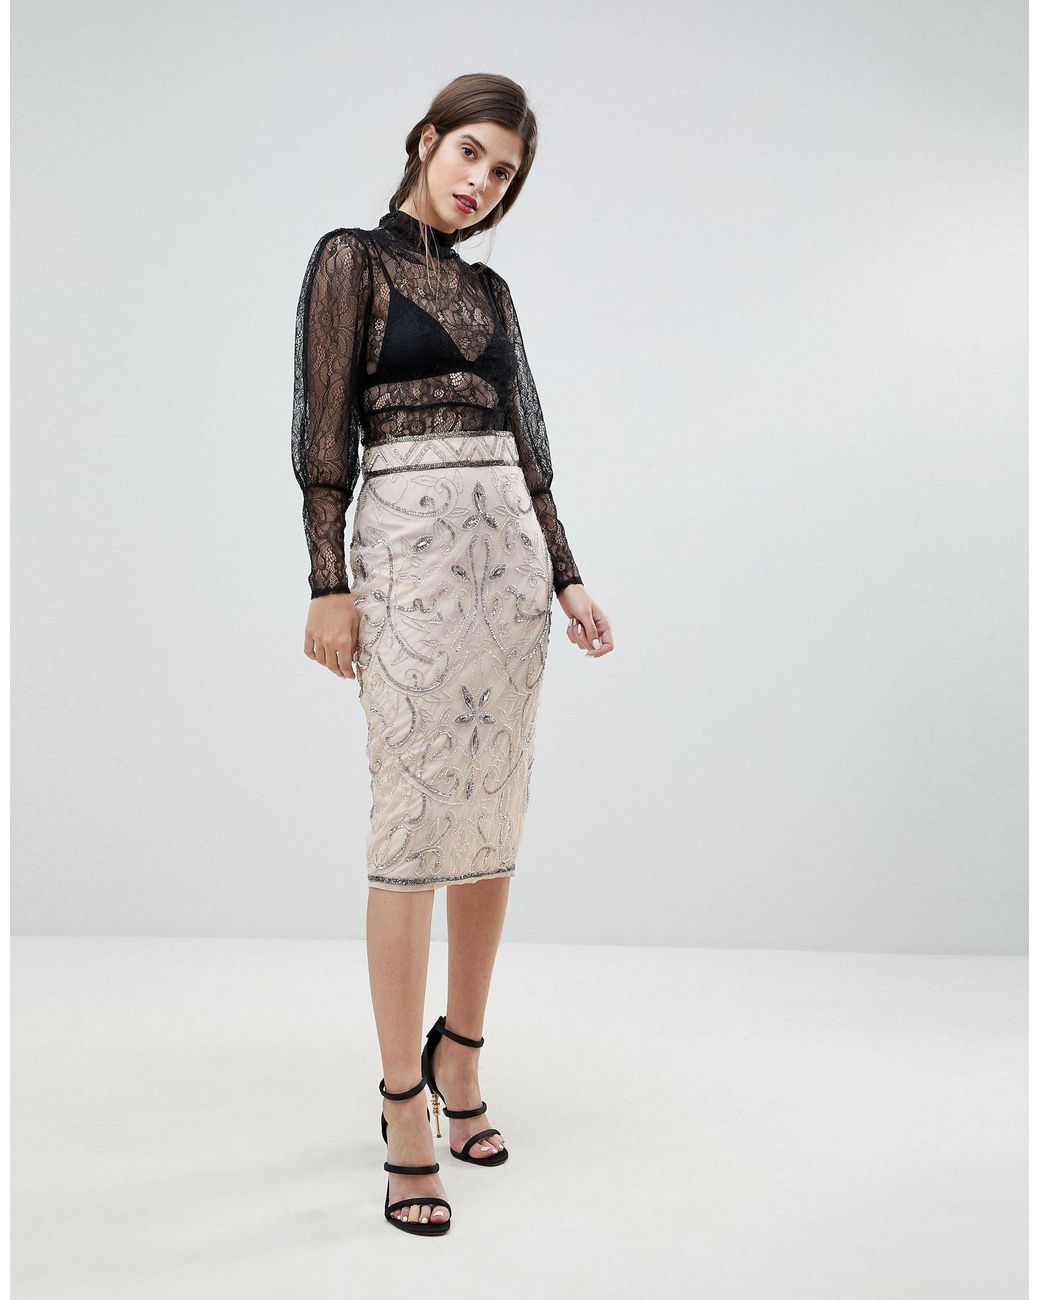 STAUD Jasmin Embellished Top & Rebecca Embellished Skirt | Bloomingdale's